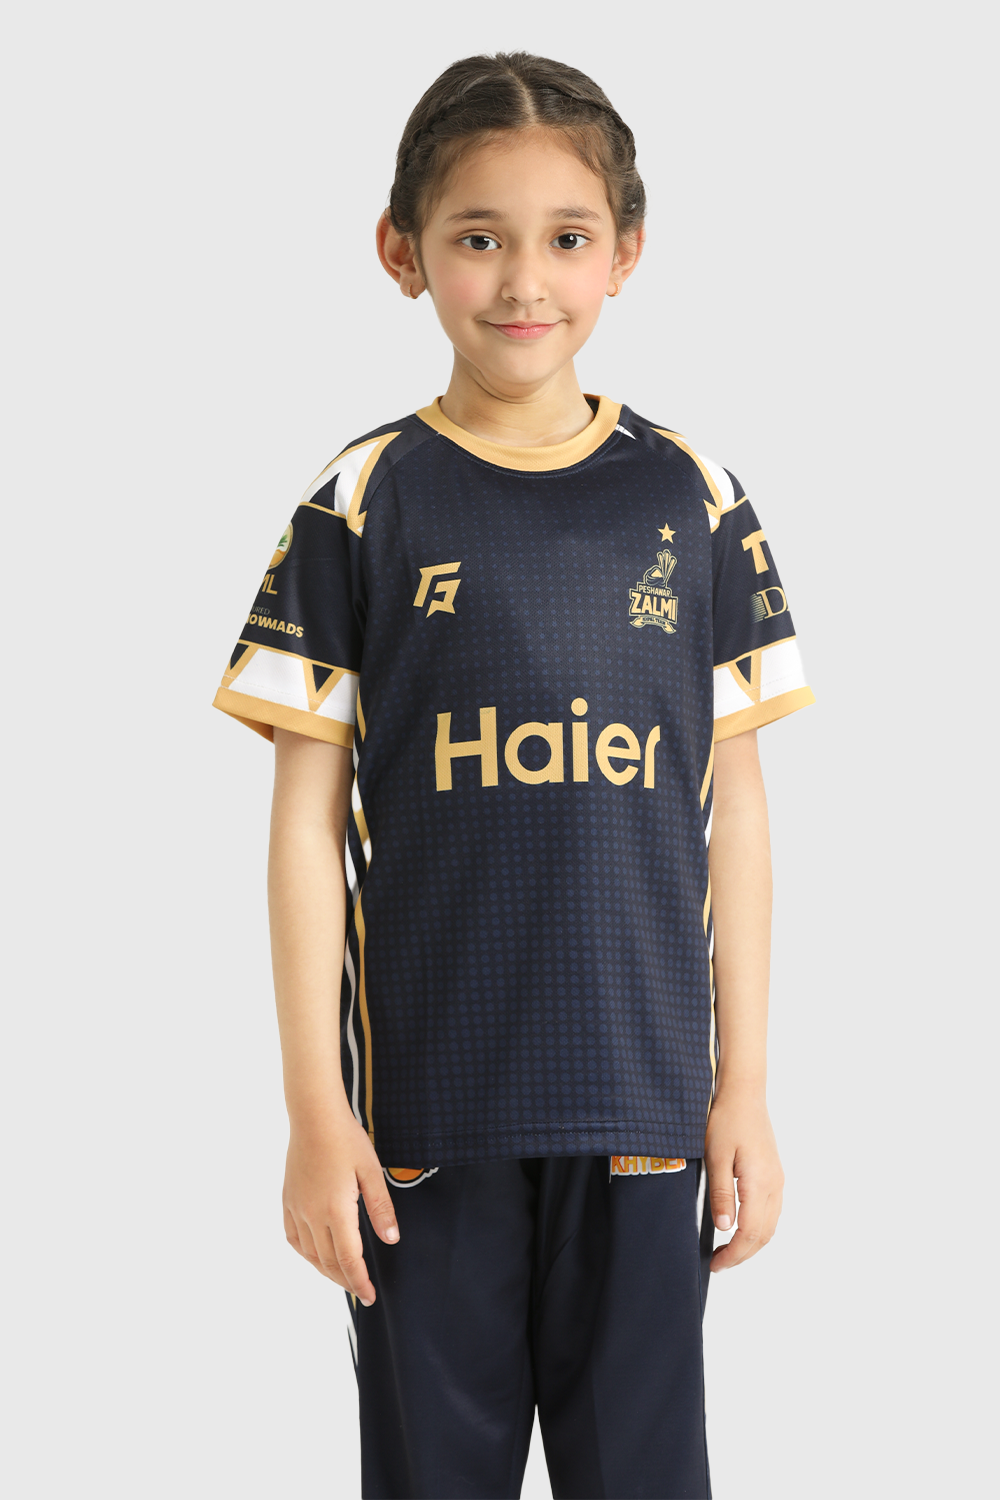 Peshawar Zalmi PSL 9 Juniors Customized Training Kit (Shirt and Trouser)